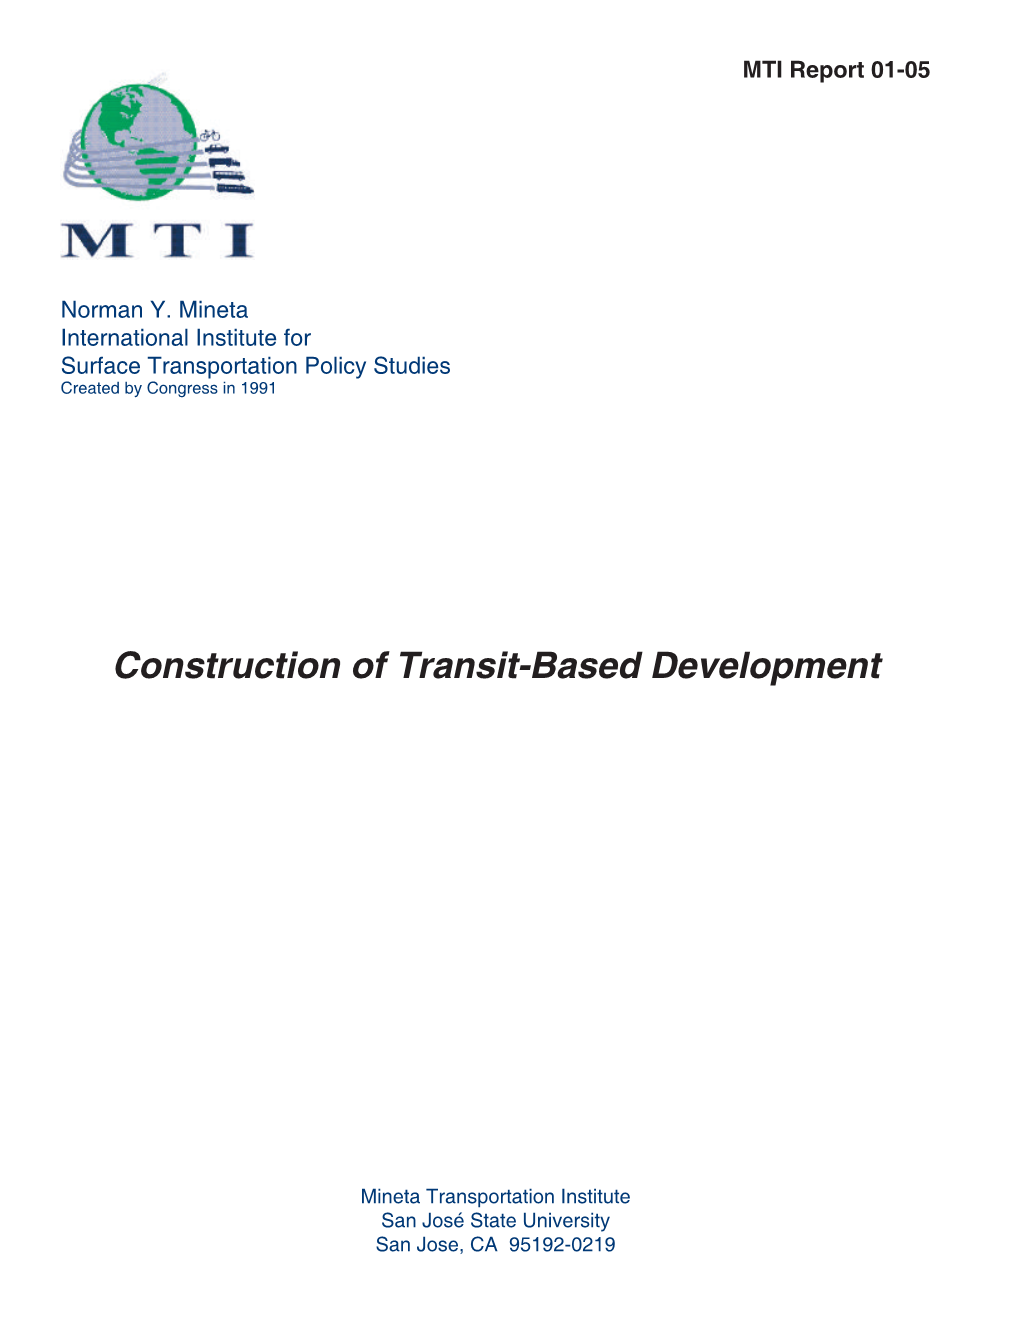 Construction of Transit-Based Development